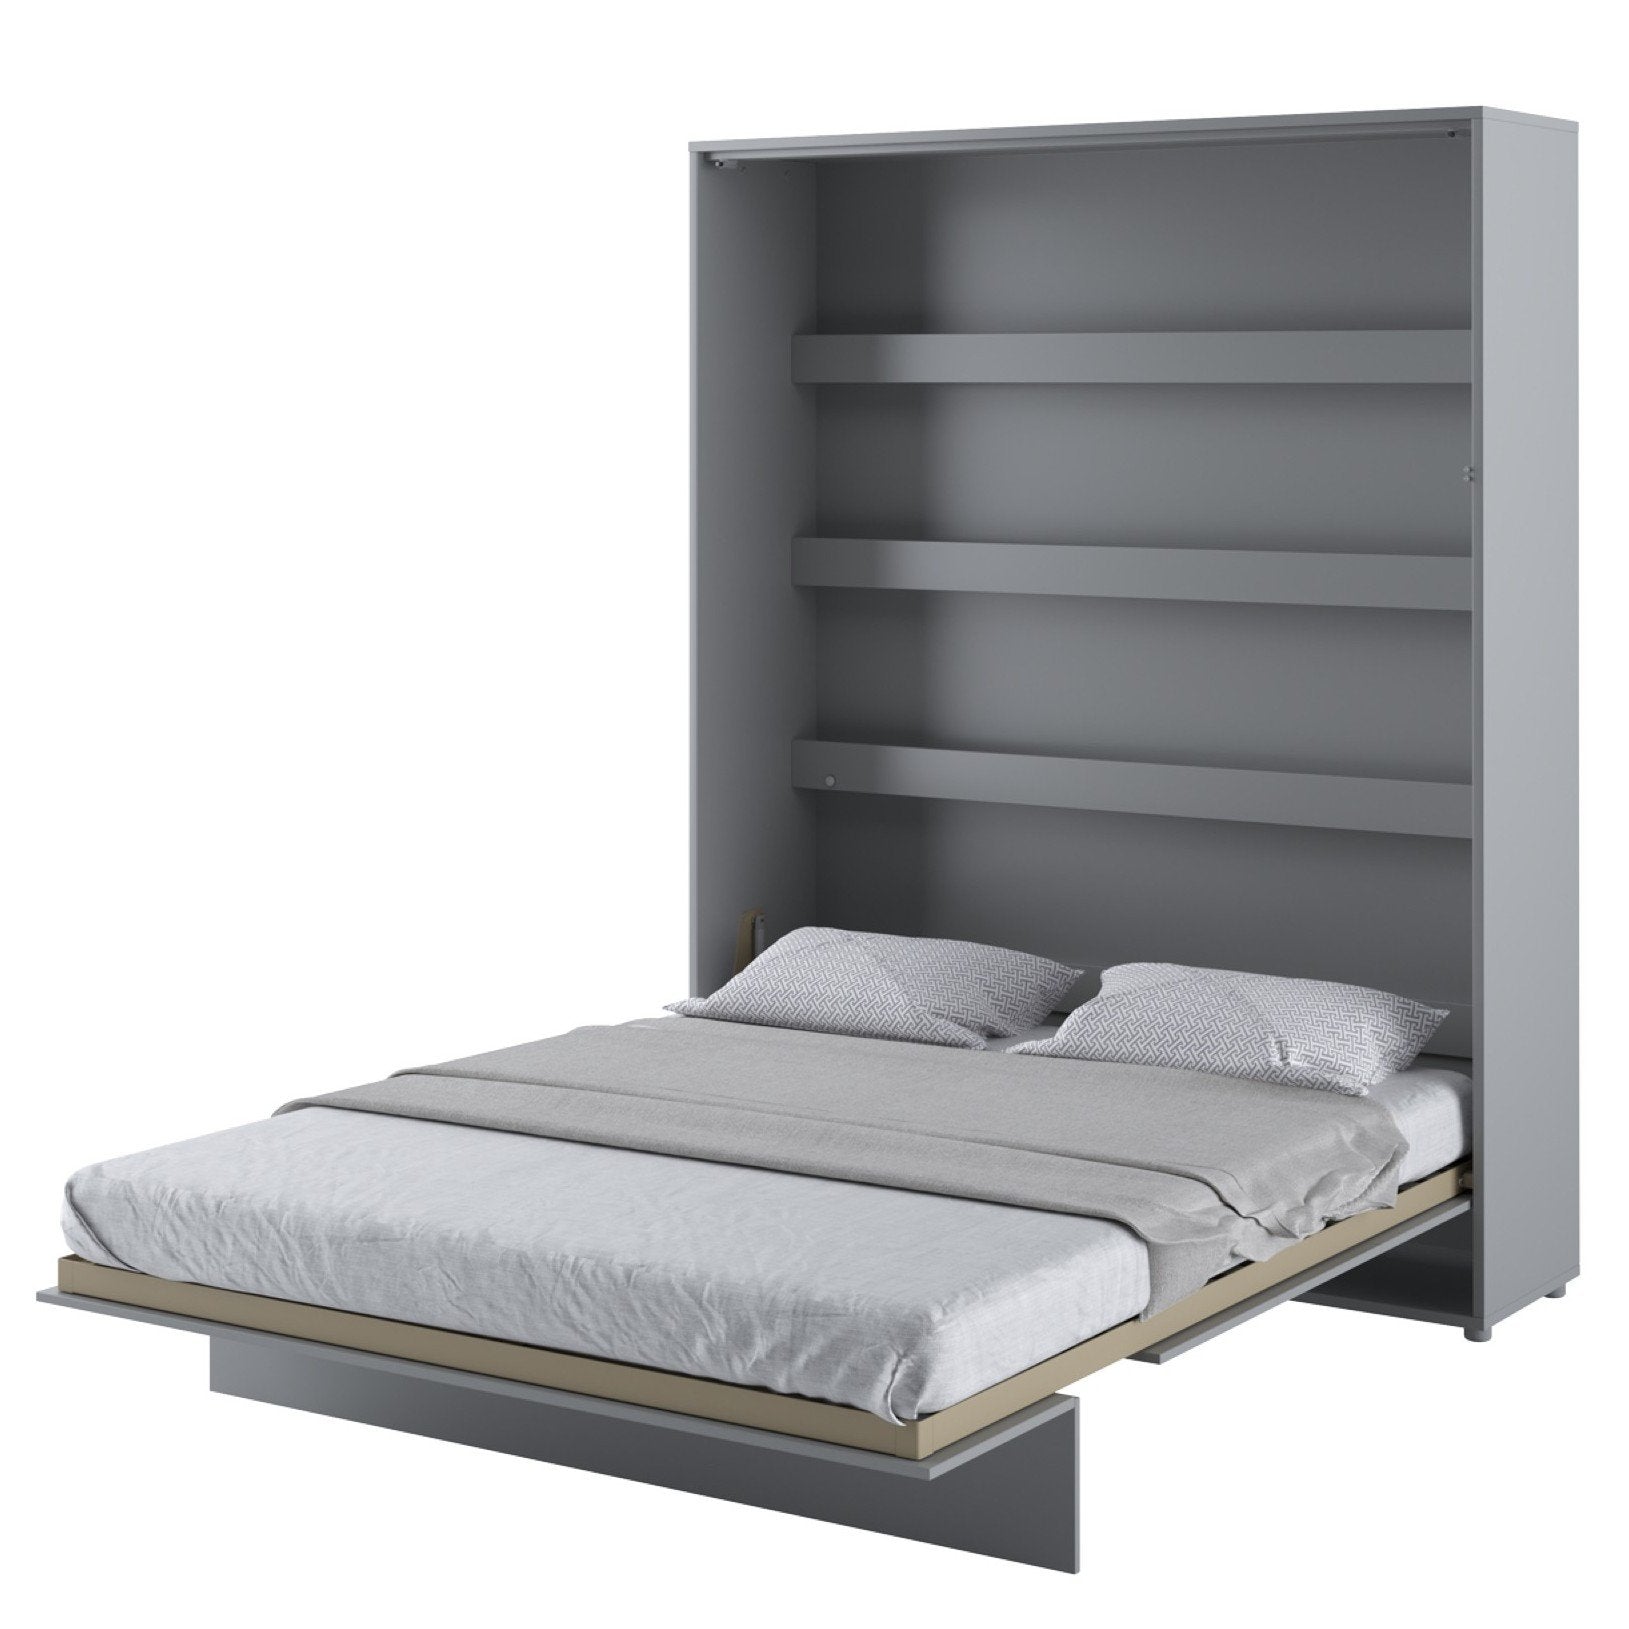 View BC13 Vertical Wall Bed Concept 180cm Murphy Bed Grey Matt 180 x 200cm information